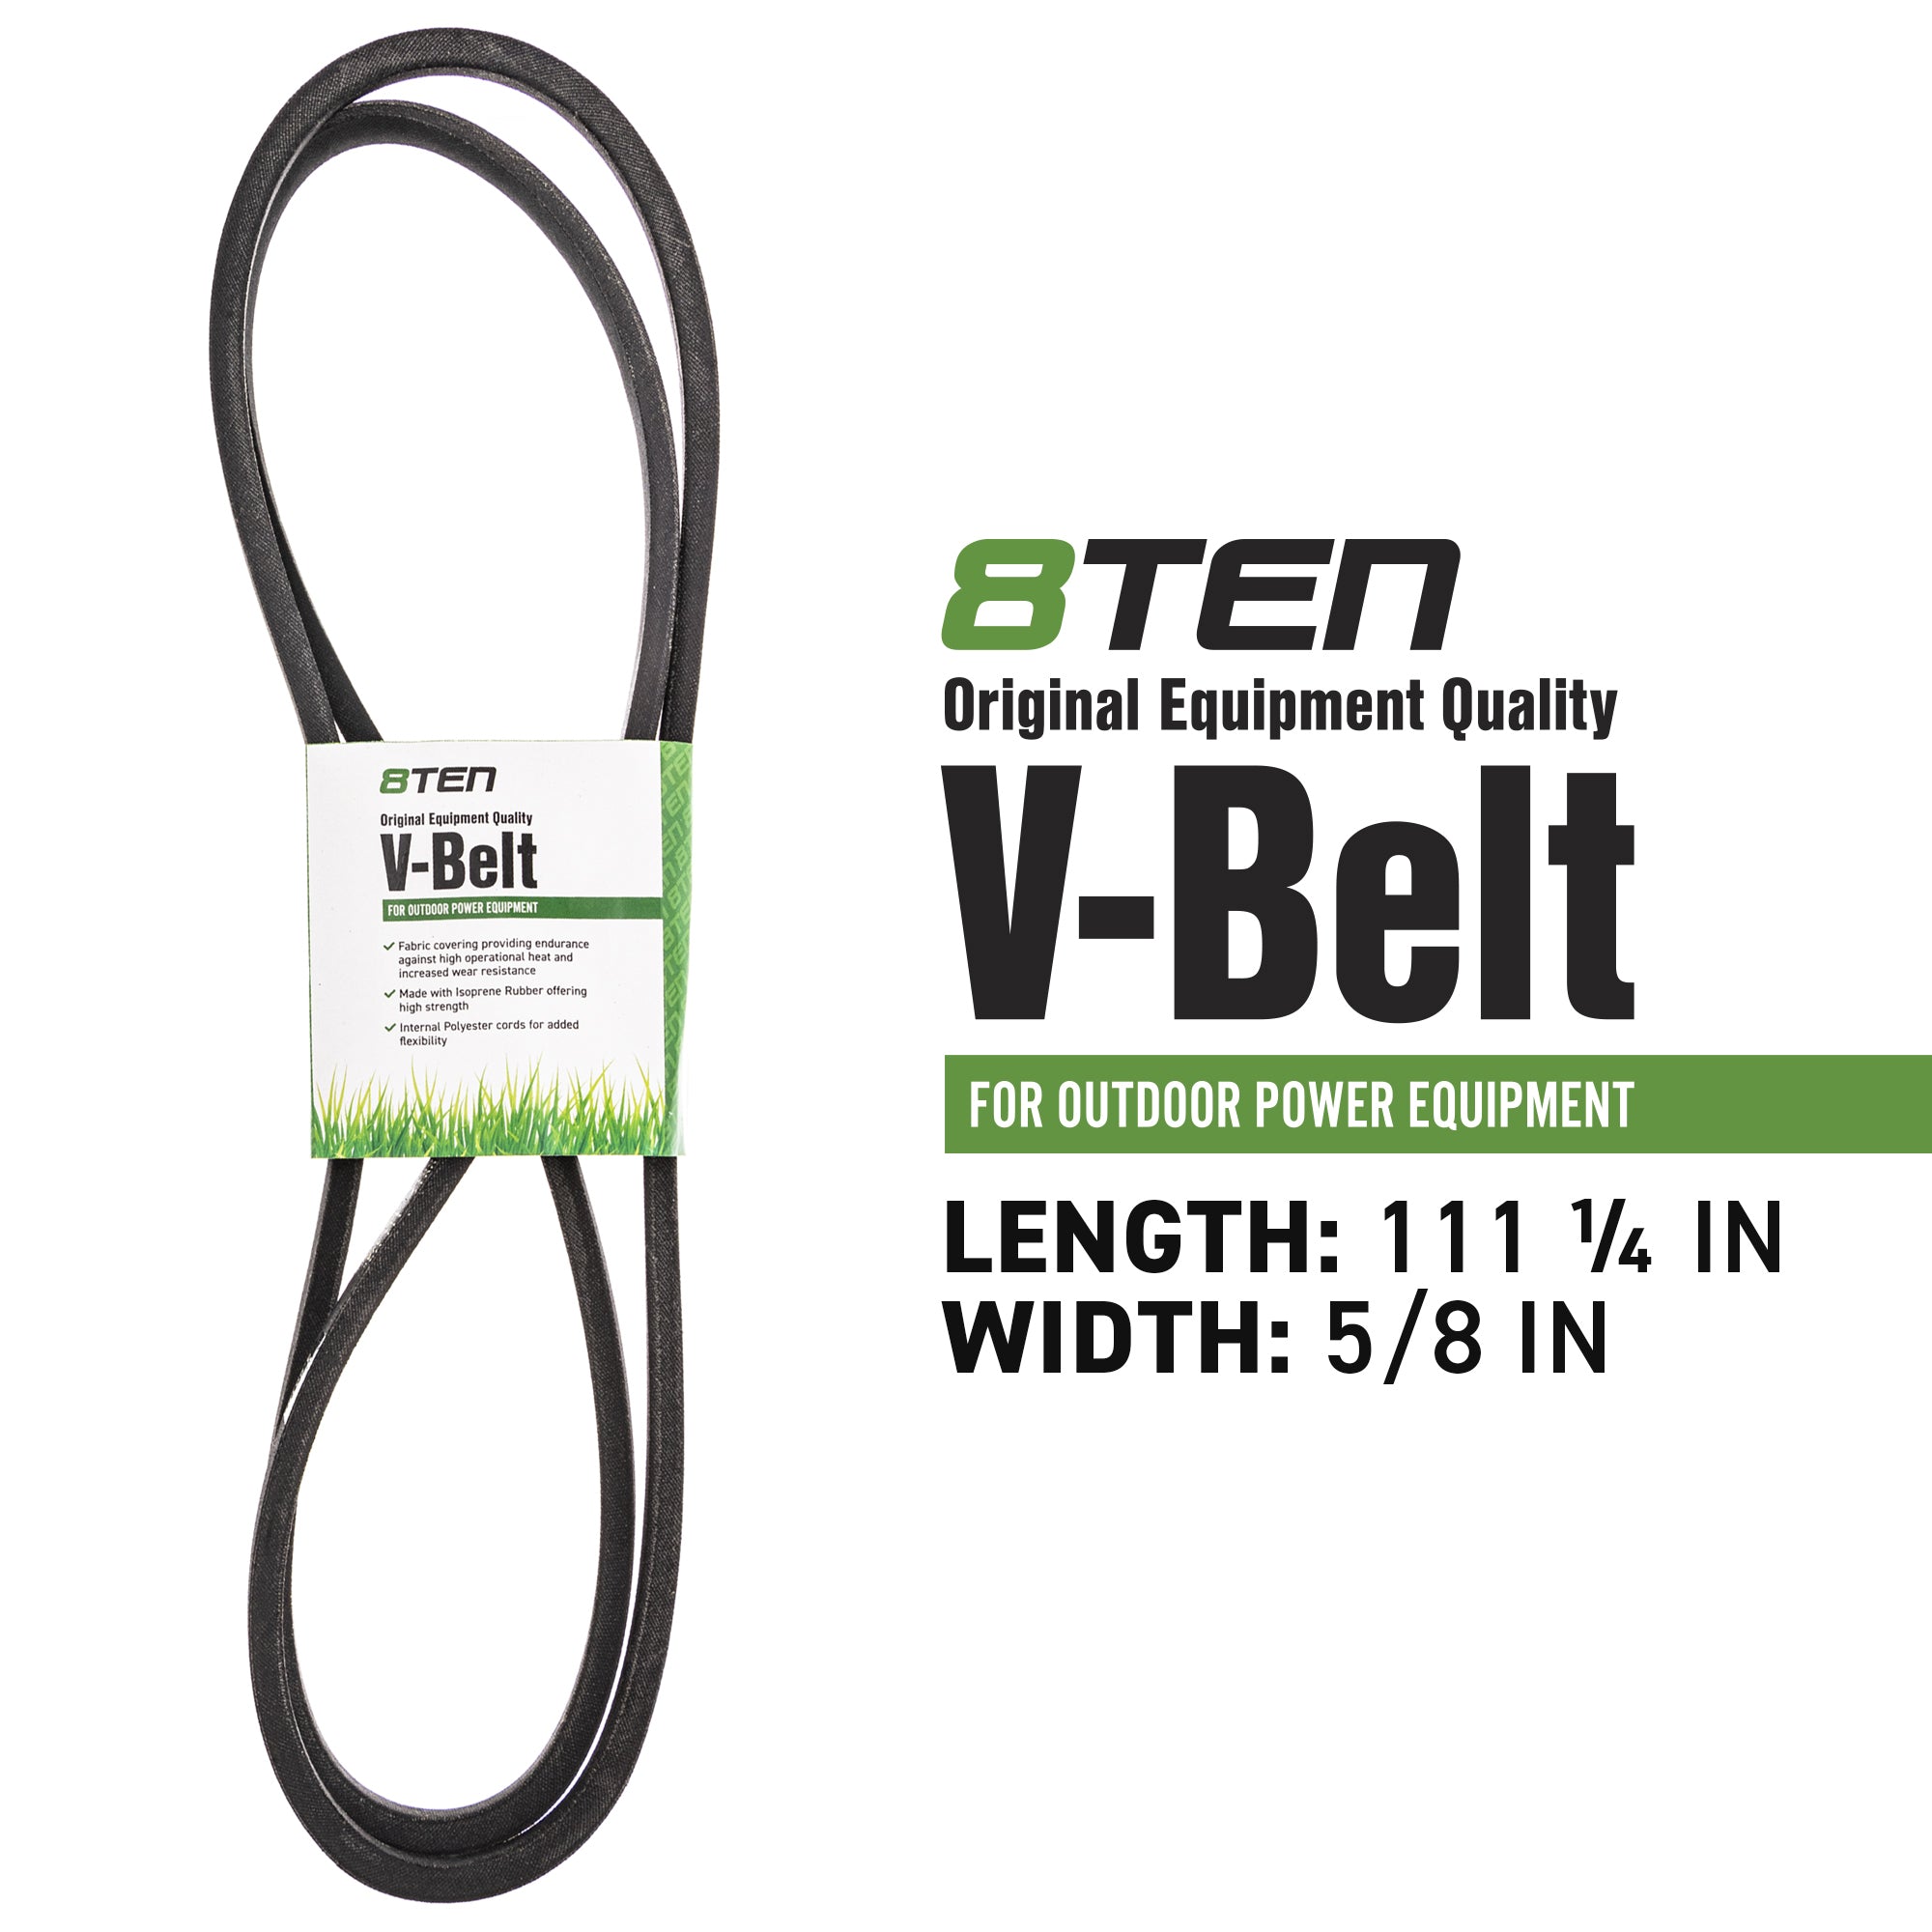 8TEN MK1006369 Clutch Belt Kit for Xtreme Warner Stens Rotary